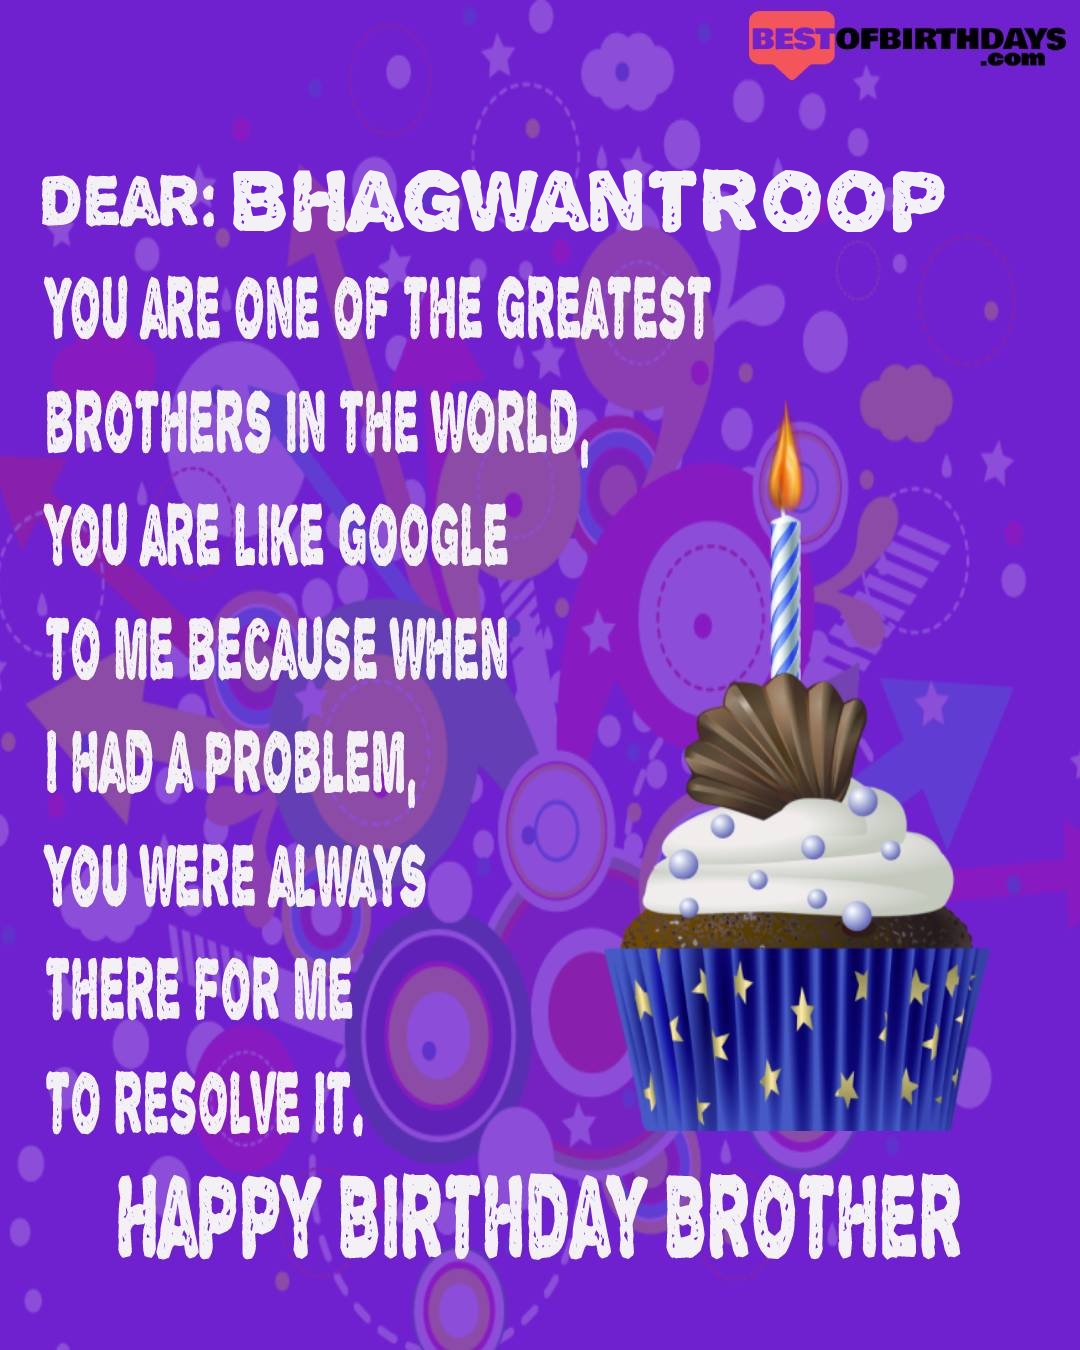 Happy birthday bhagwantroop bhai brother bro